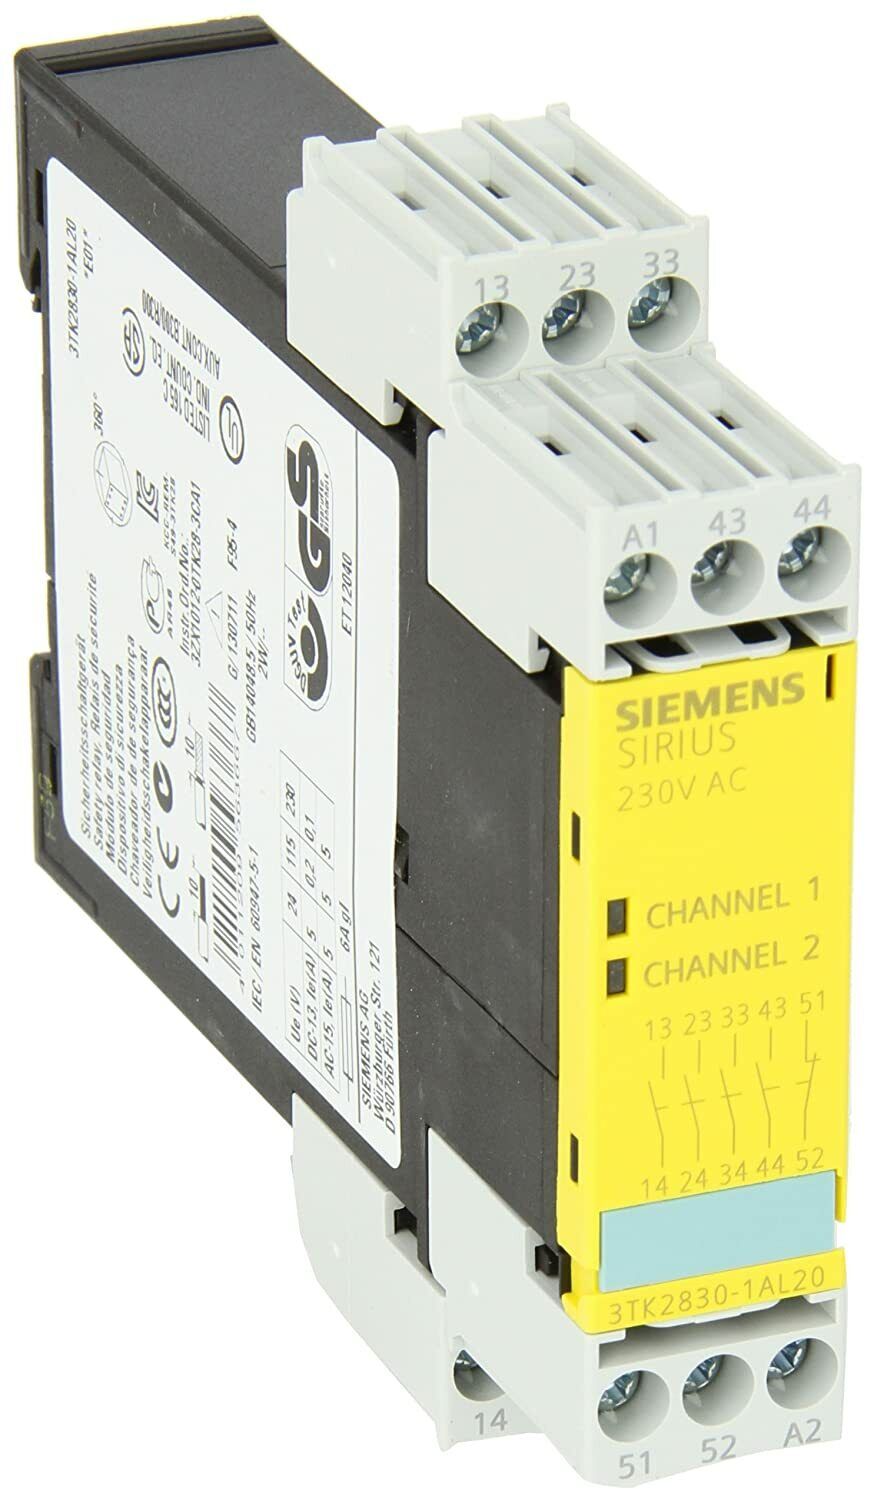 Siemens Sirius 3TK28 30-1AL20 Safety Relay Expansion Unit, 4NO, 230VAC